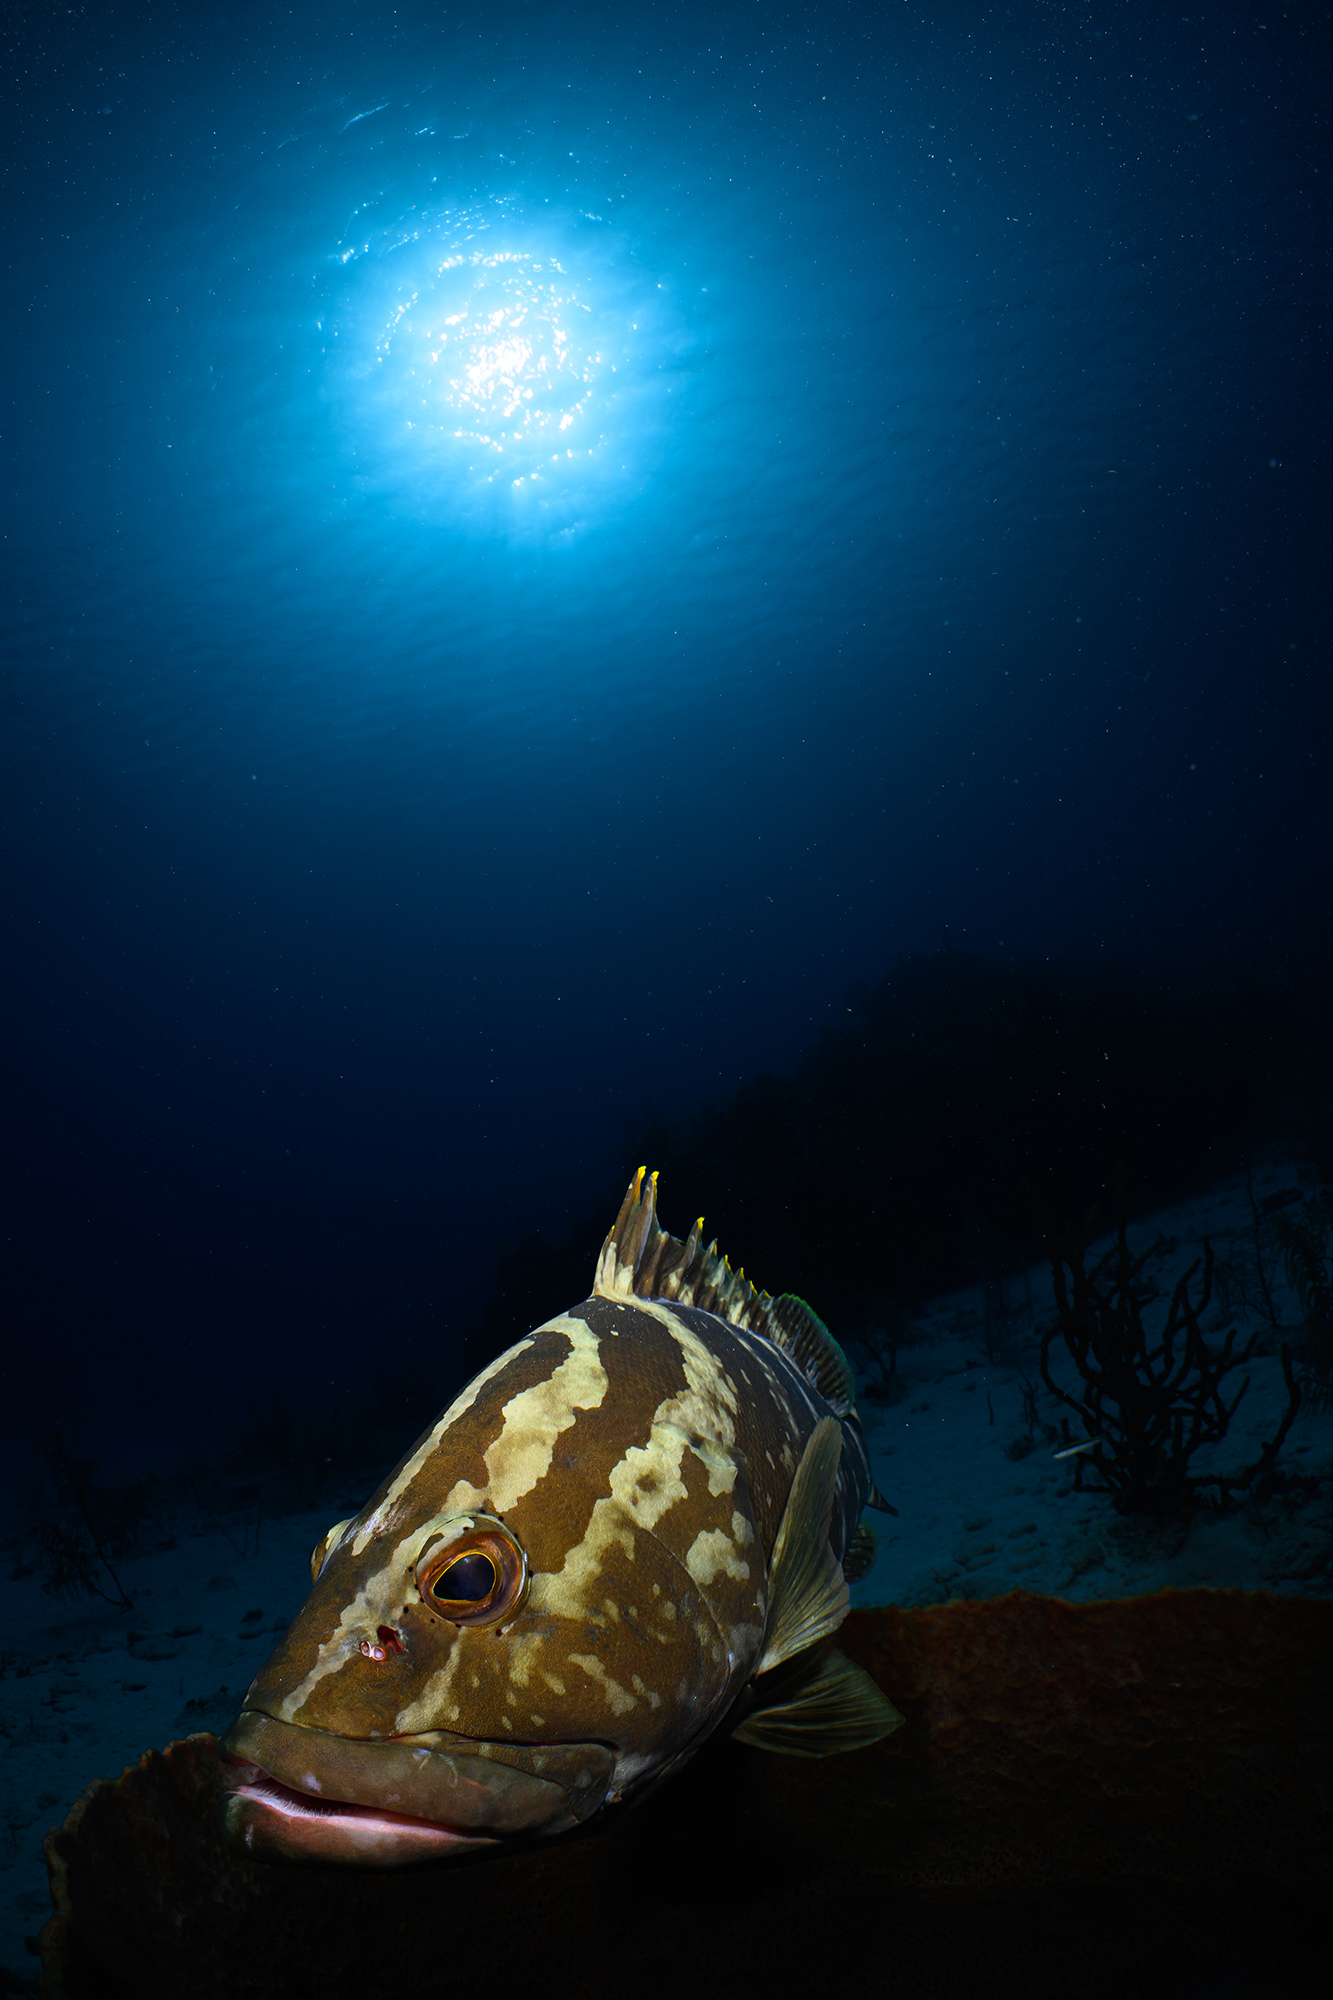 Nikon Z8 Underwater Review - Bluewater Photo